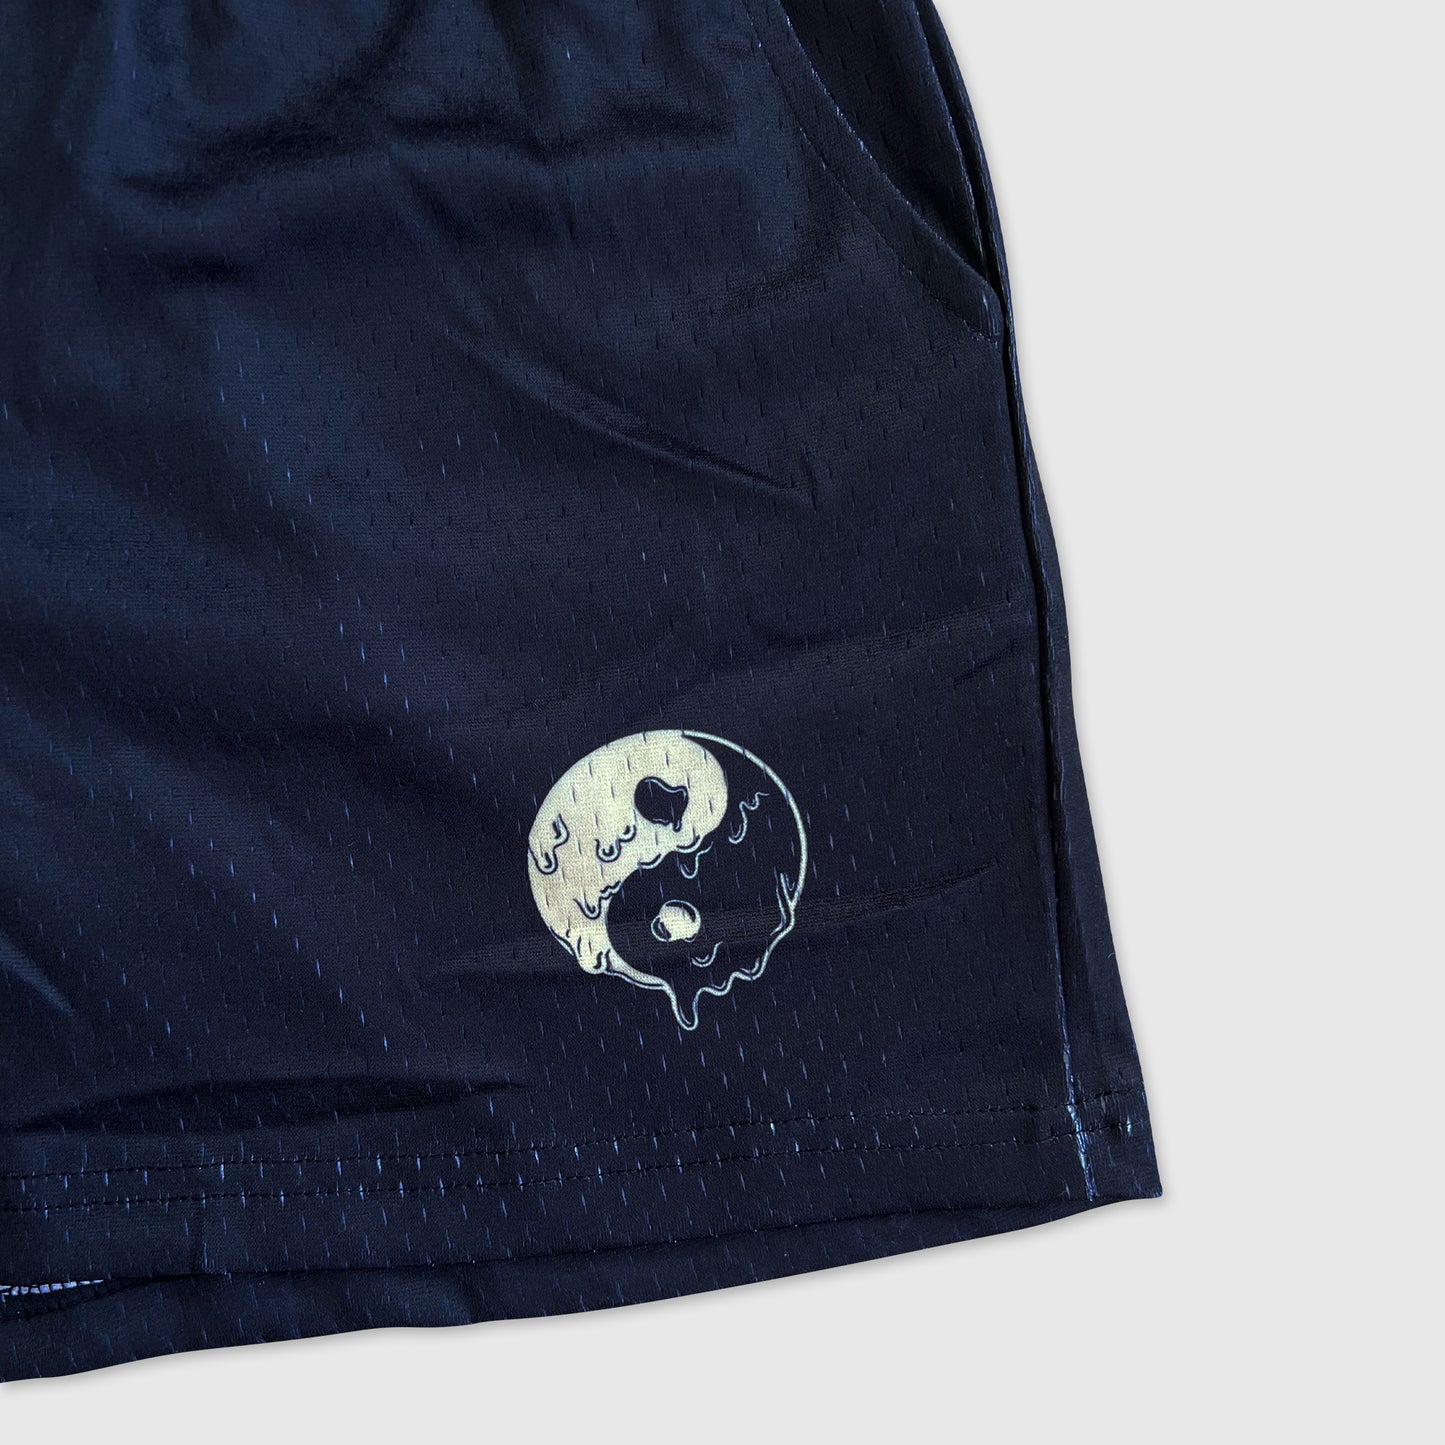 Yin Yang Drip Mesh Shorts 5" - Black Cream Color Block